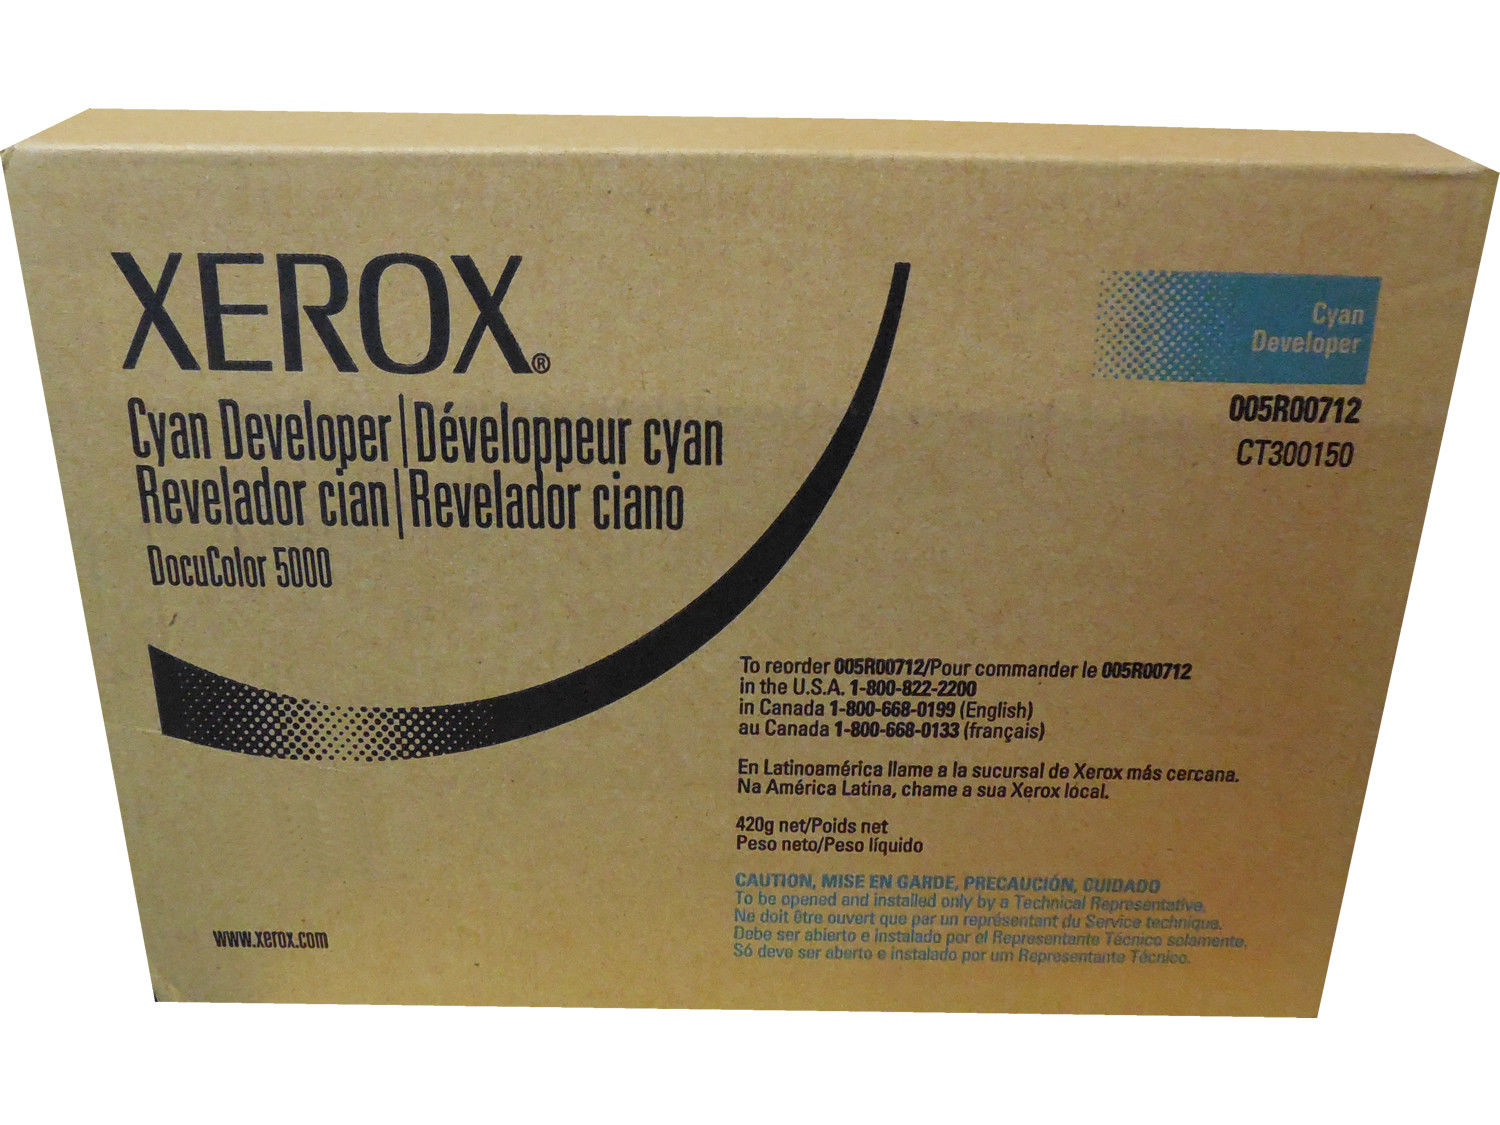 Xerox 005R00712 Cyan Developer - image 1 of 2